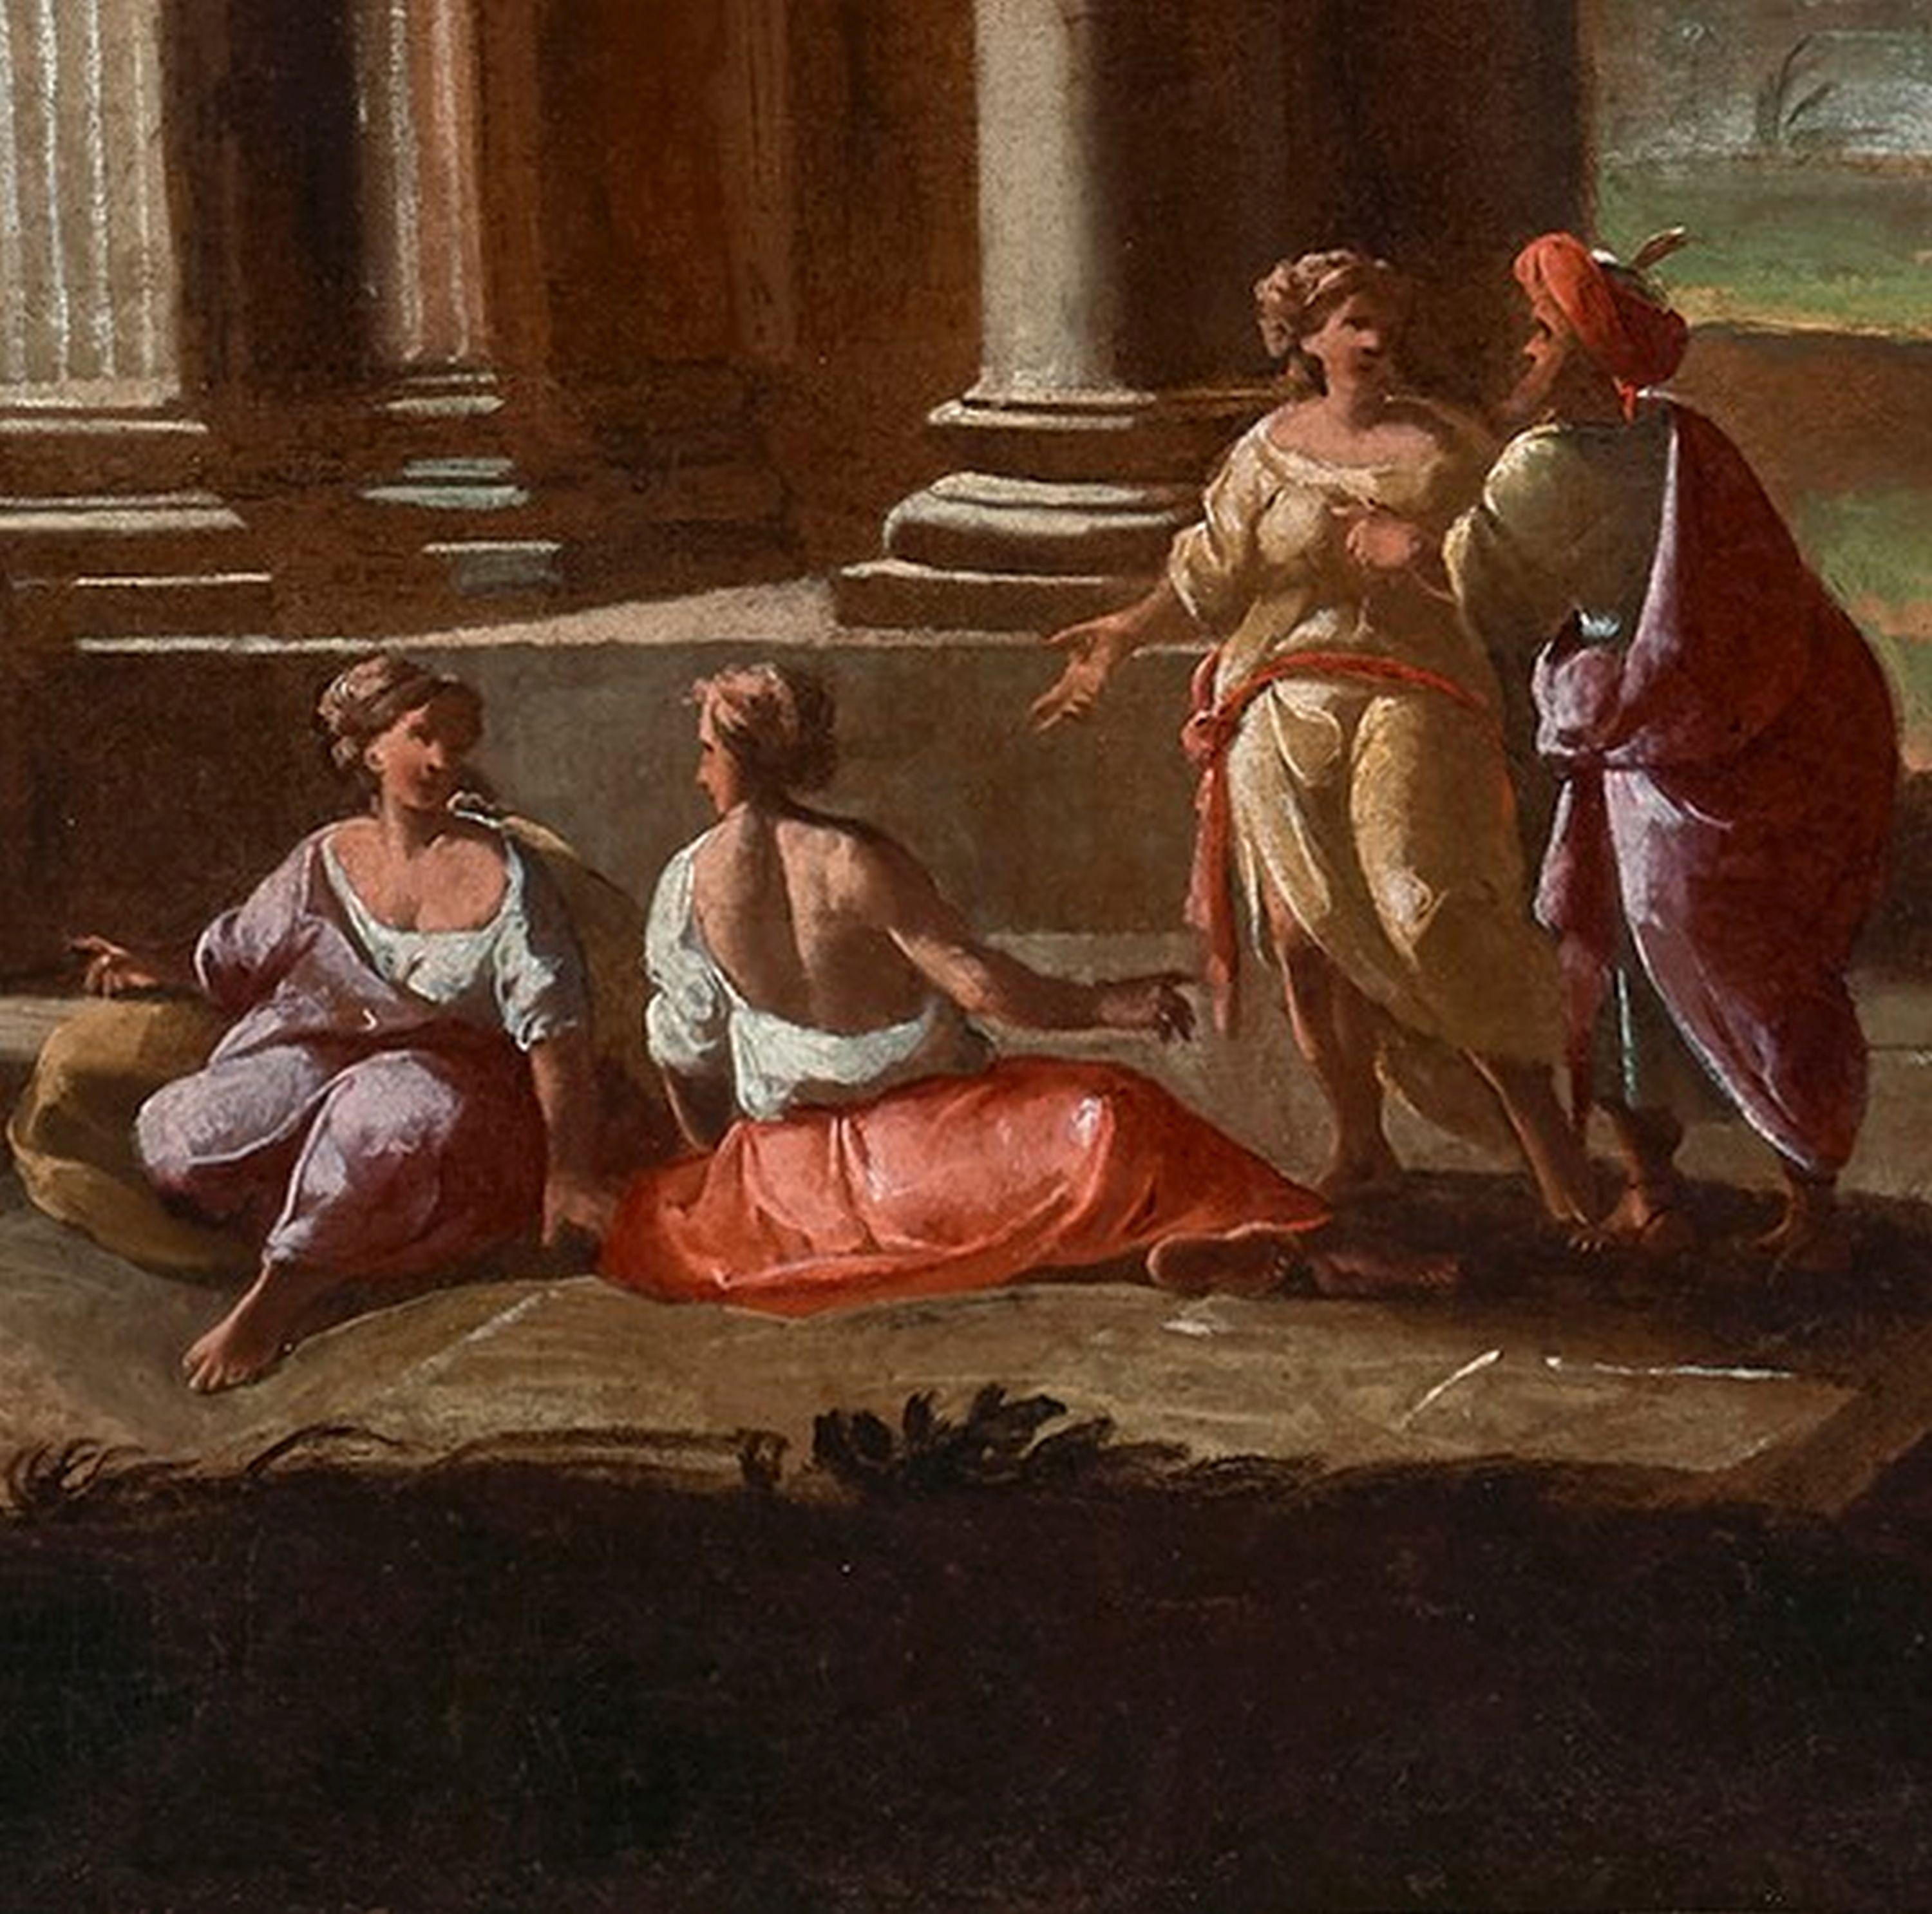 Italian Capriccio, Carlieri 18th Century Oil on Canvas Architectural Capriccio Painting